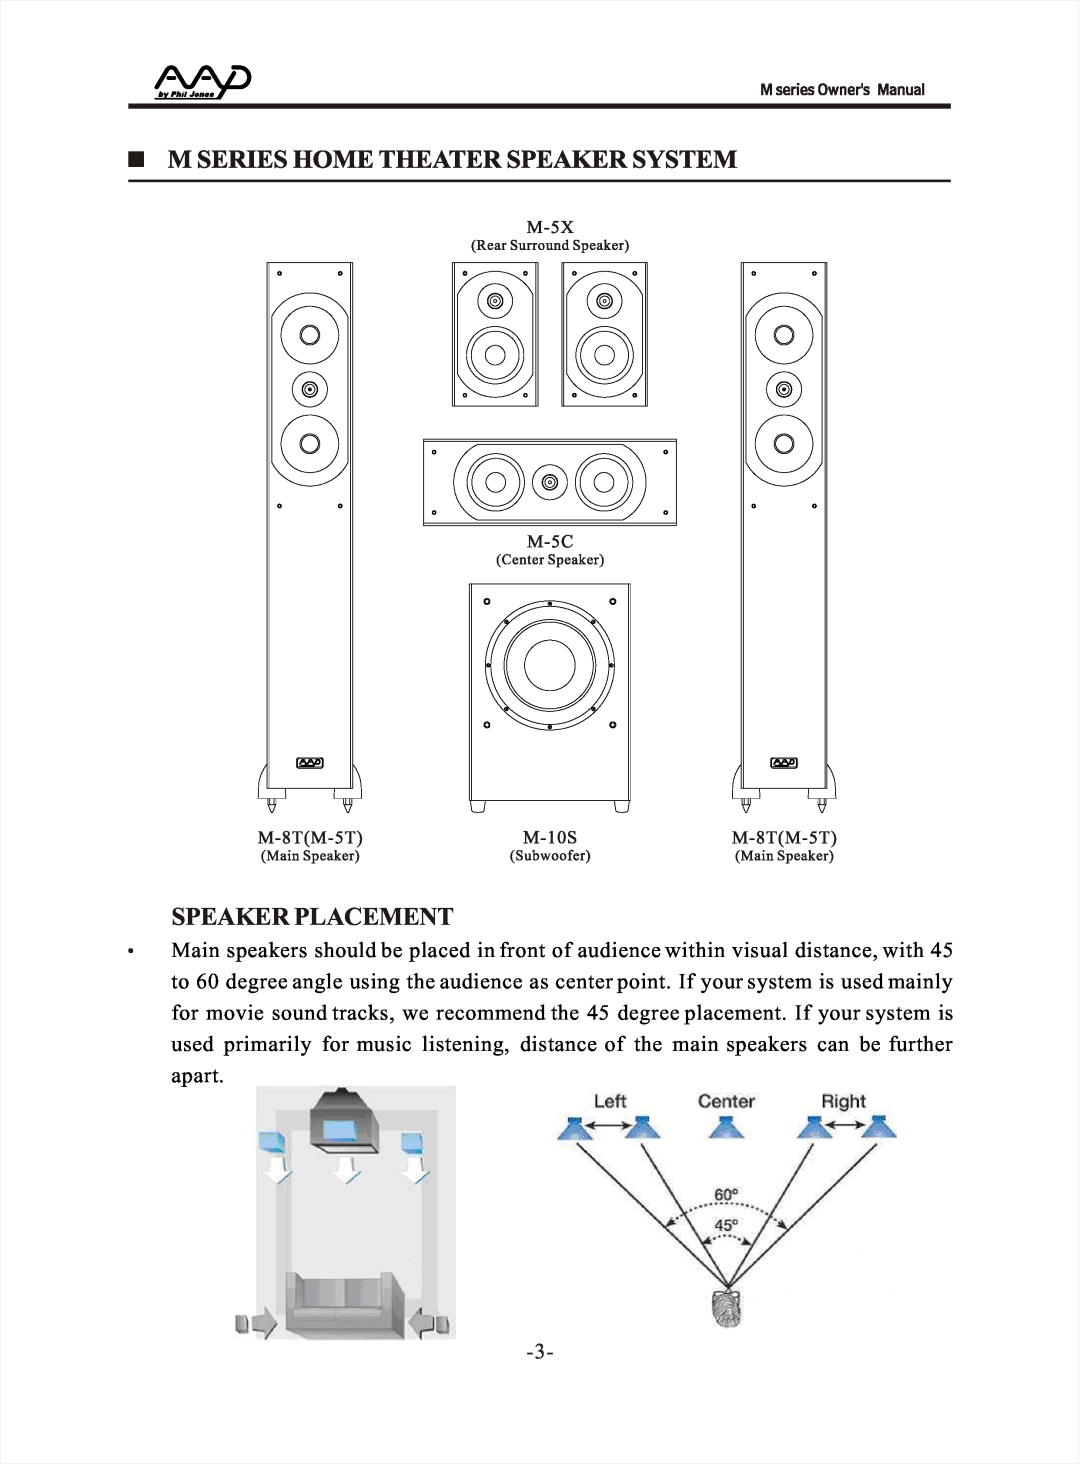 American Acoustic Development M Series manual Speaker Placement 